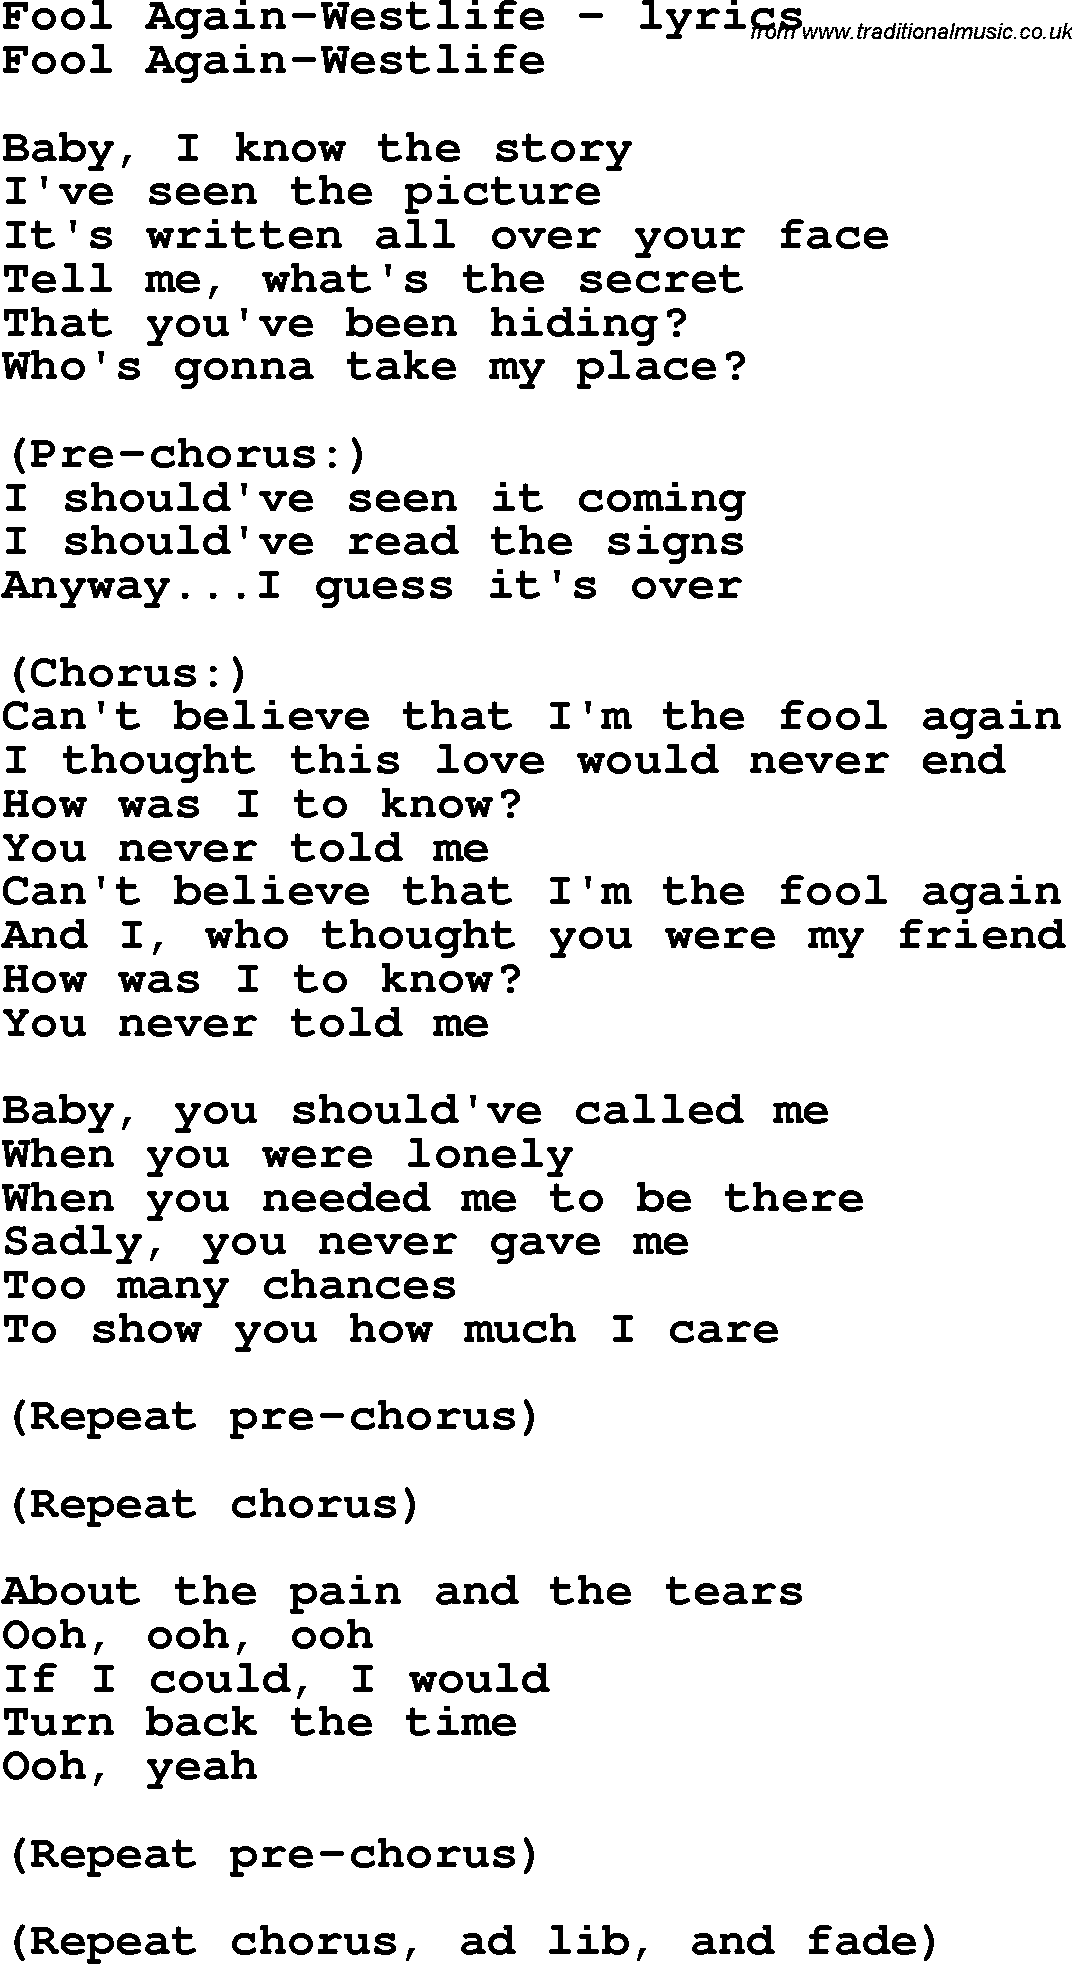 Love Song Lyrics for: Fool Again-Westlife